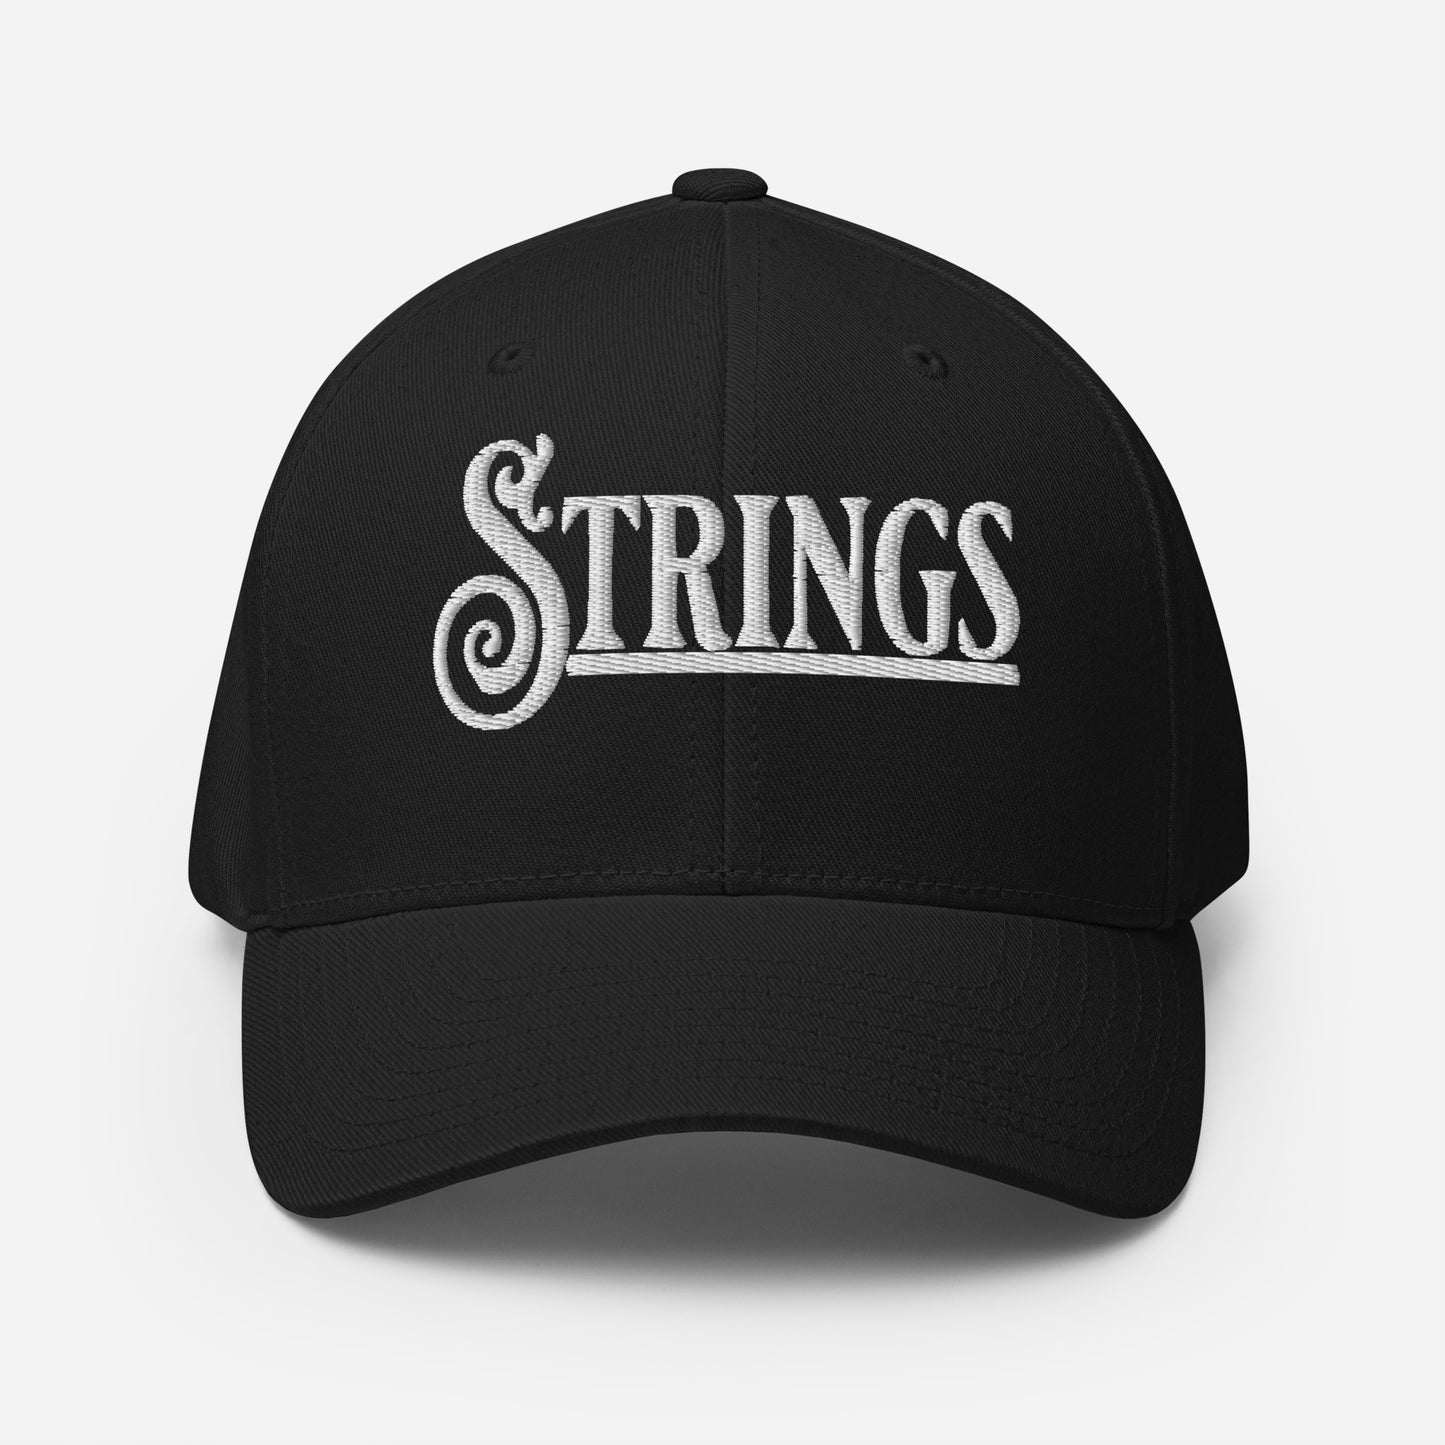 Strings FlexFit Structured Twill Cap | BMFS 33 Inspired Cap